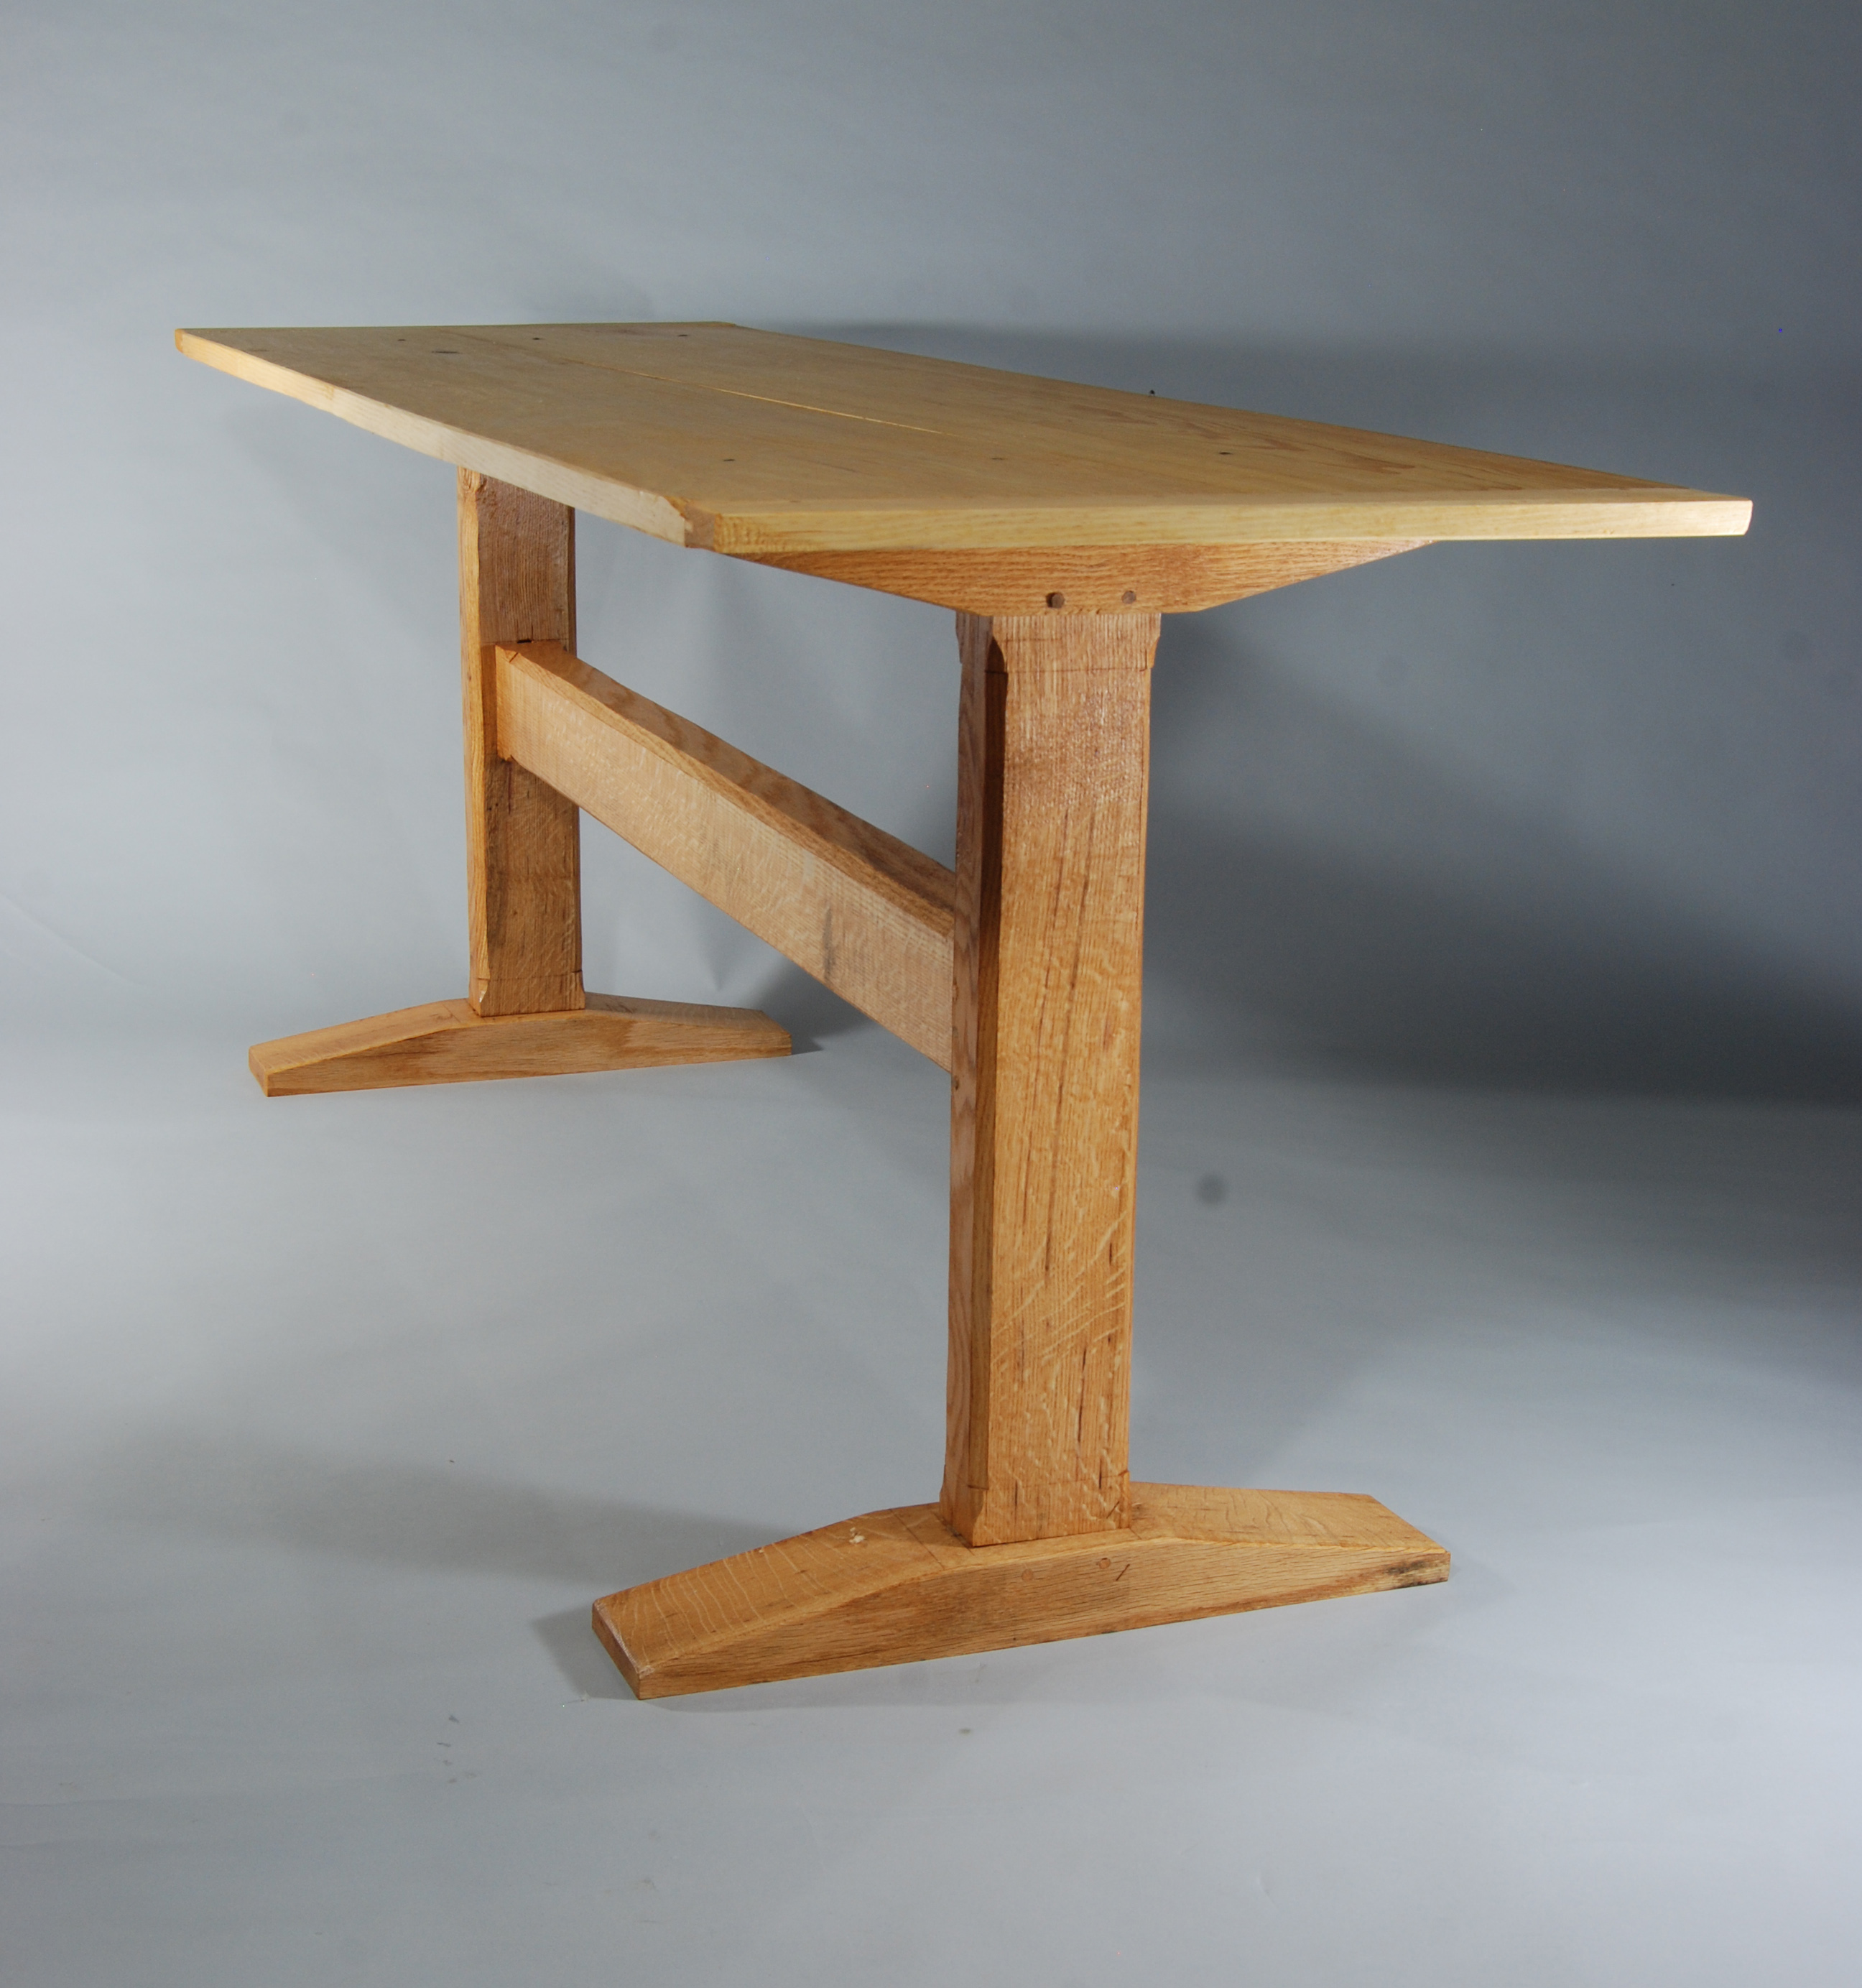 wood trestle table plans easy pdf plans